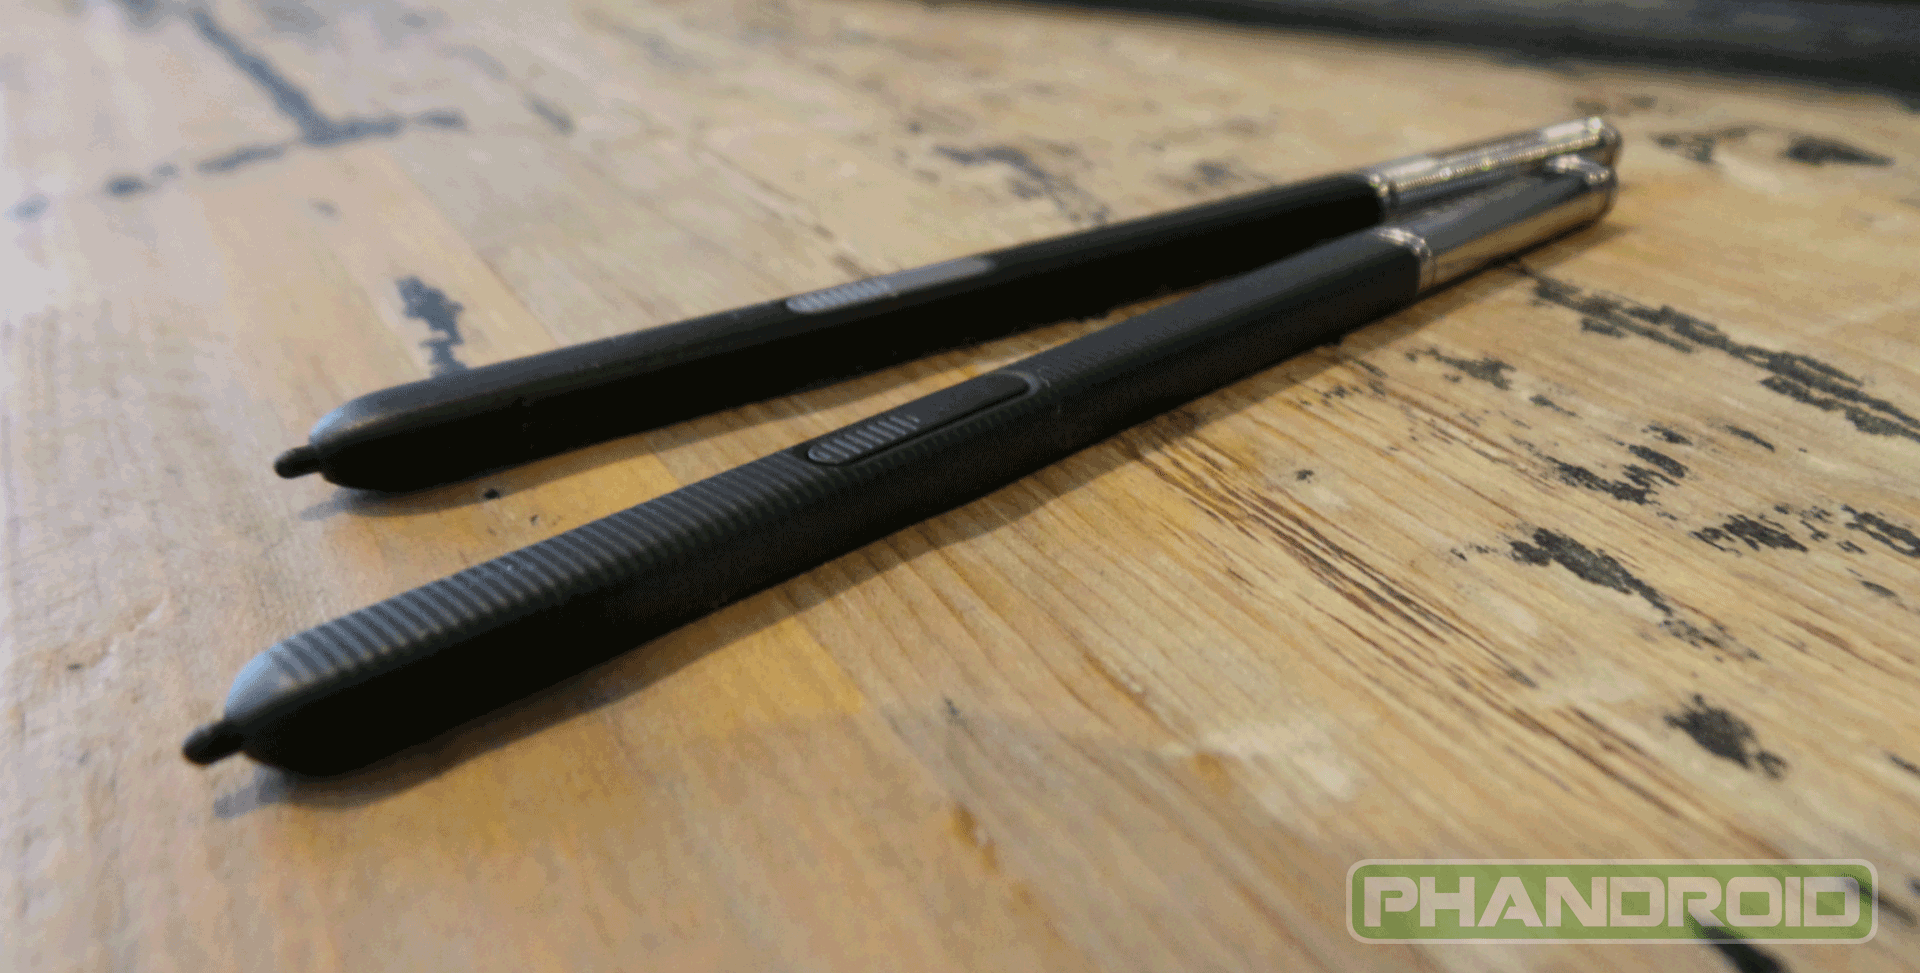 samsung digitizer pen stylus manual